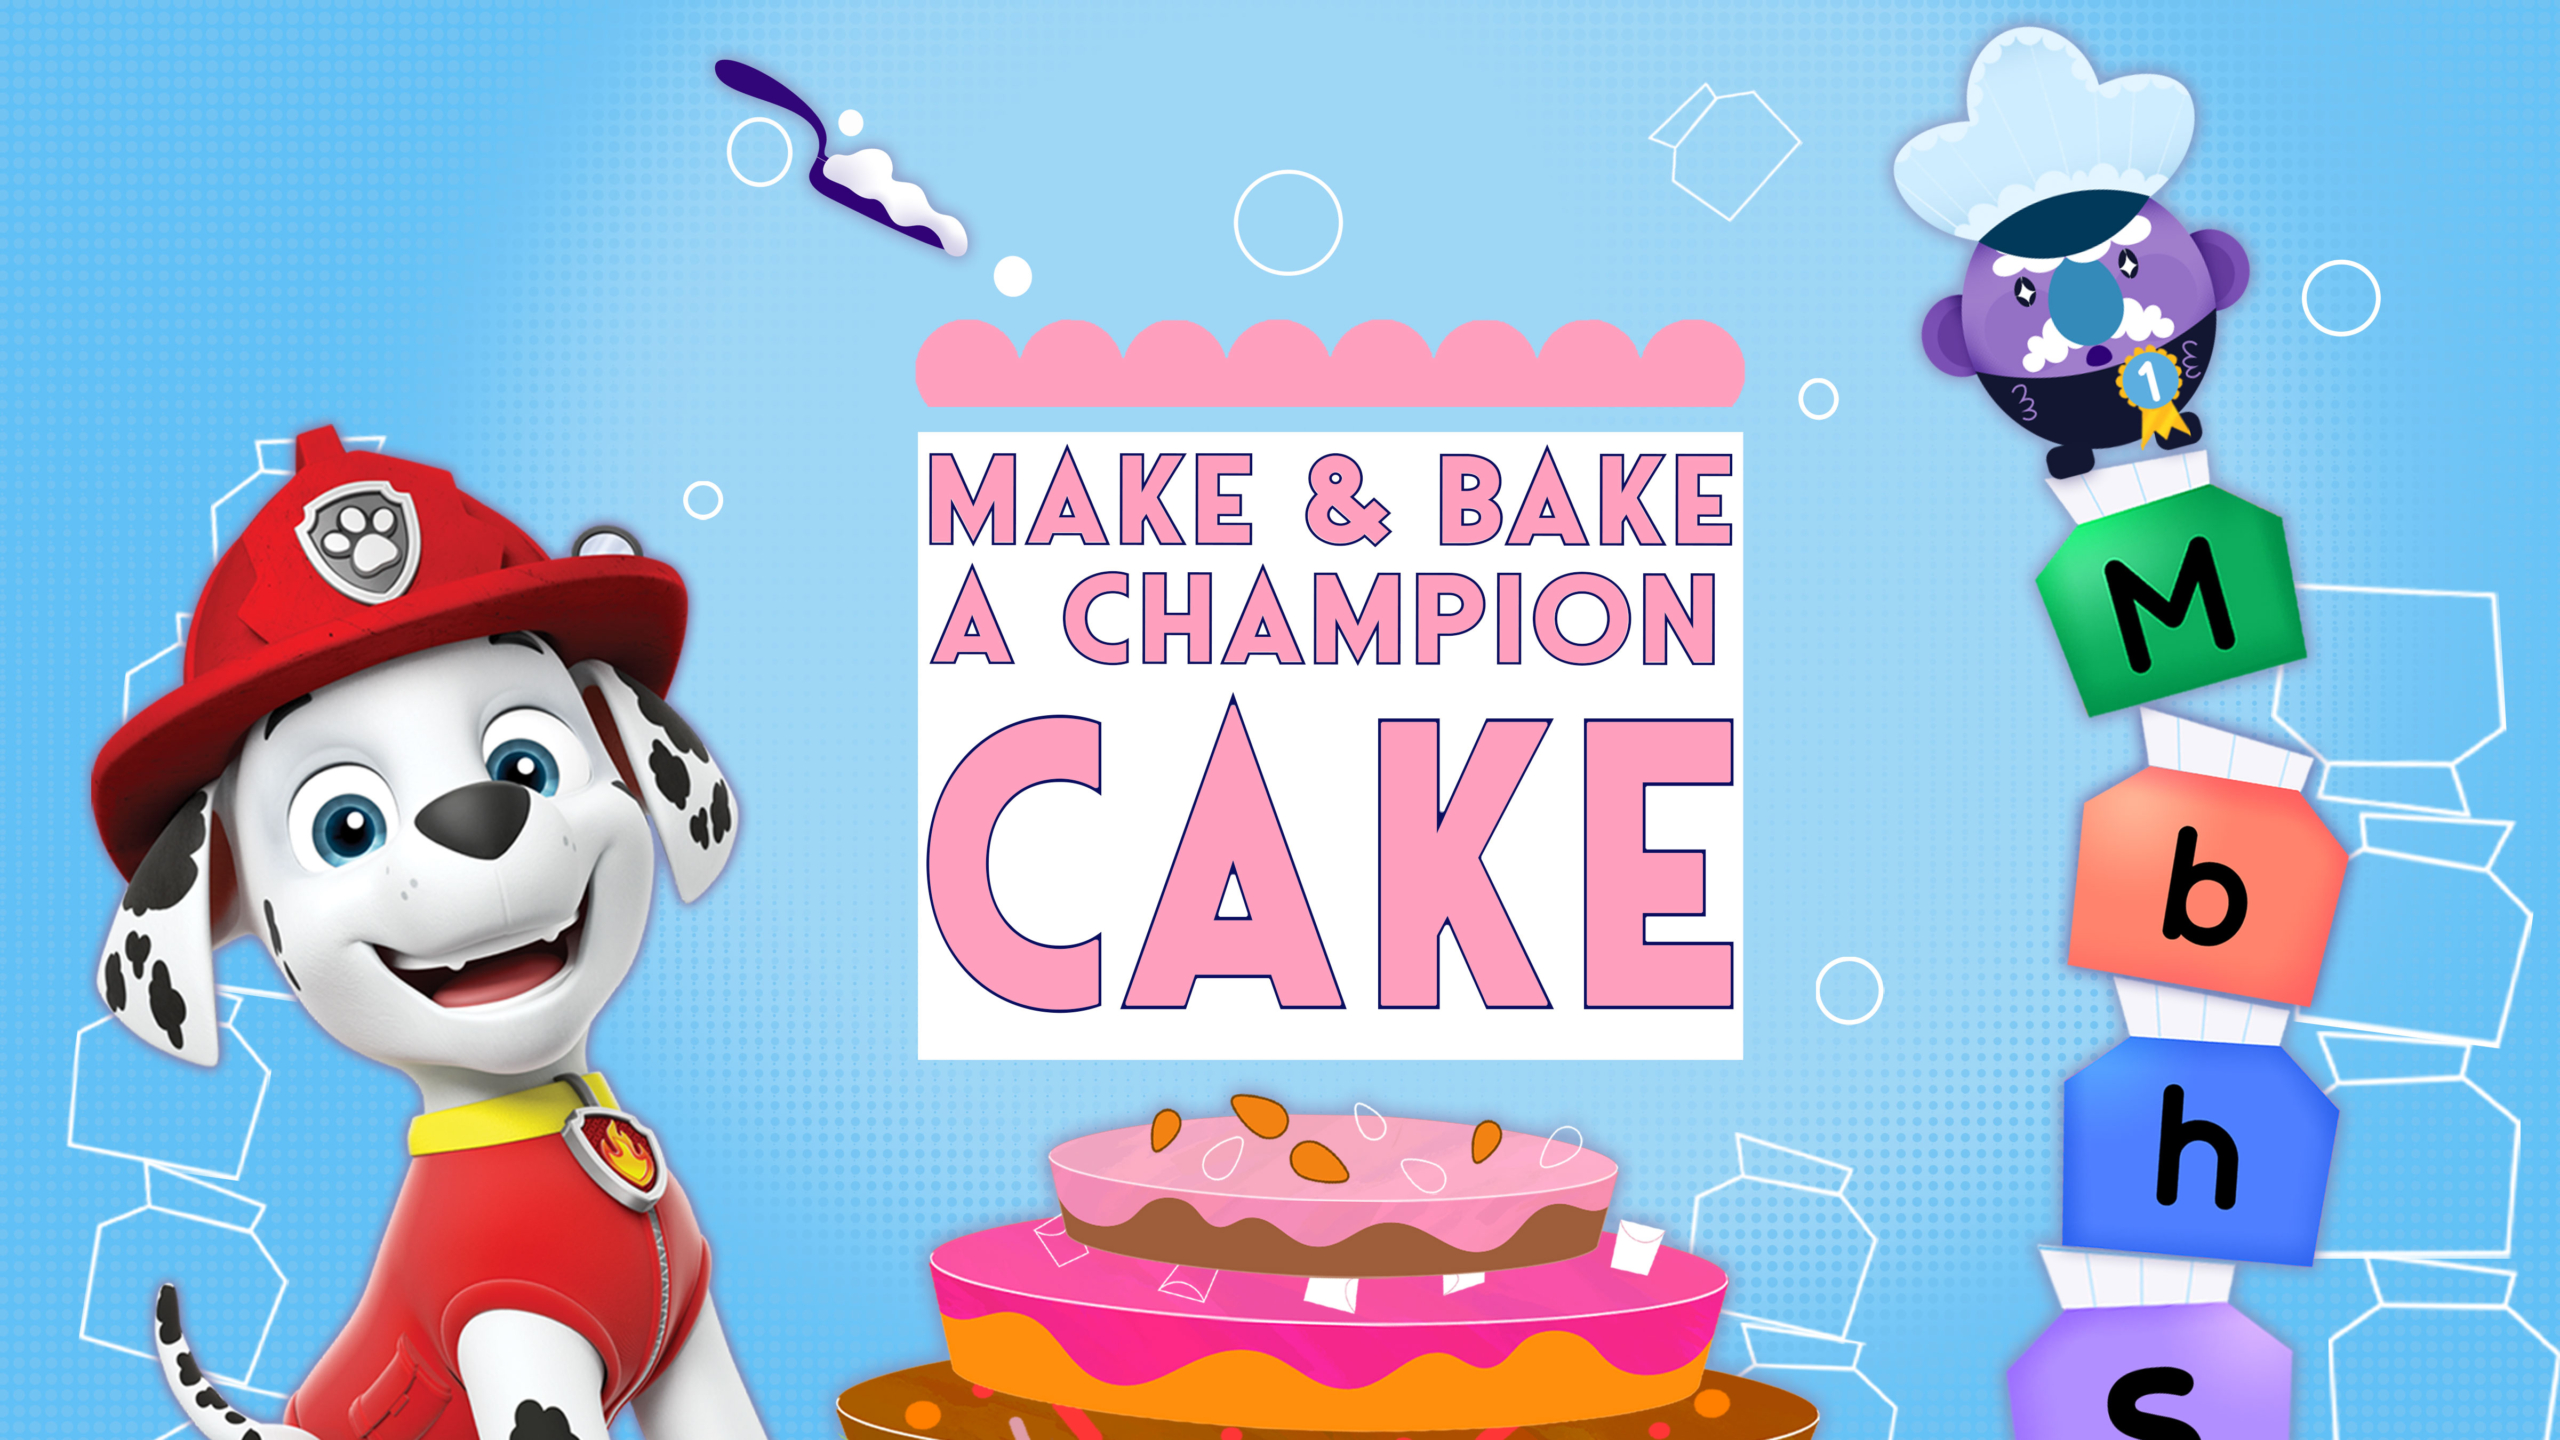 Make & Bake a Champion Cake